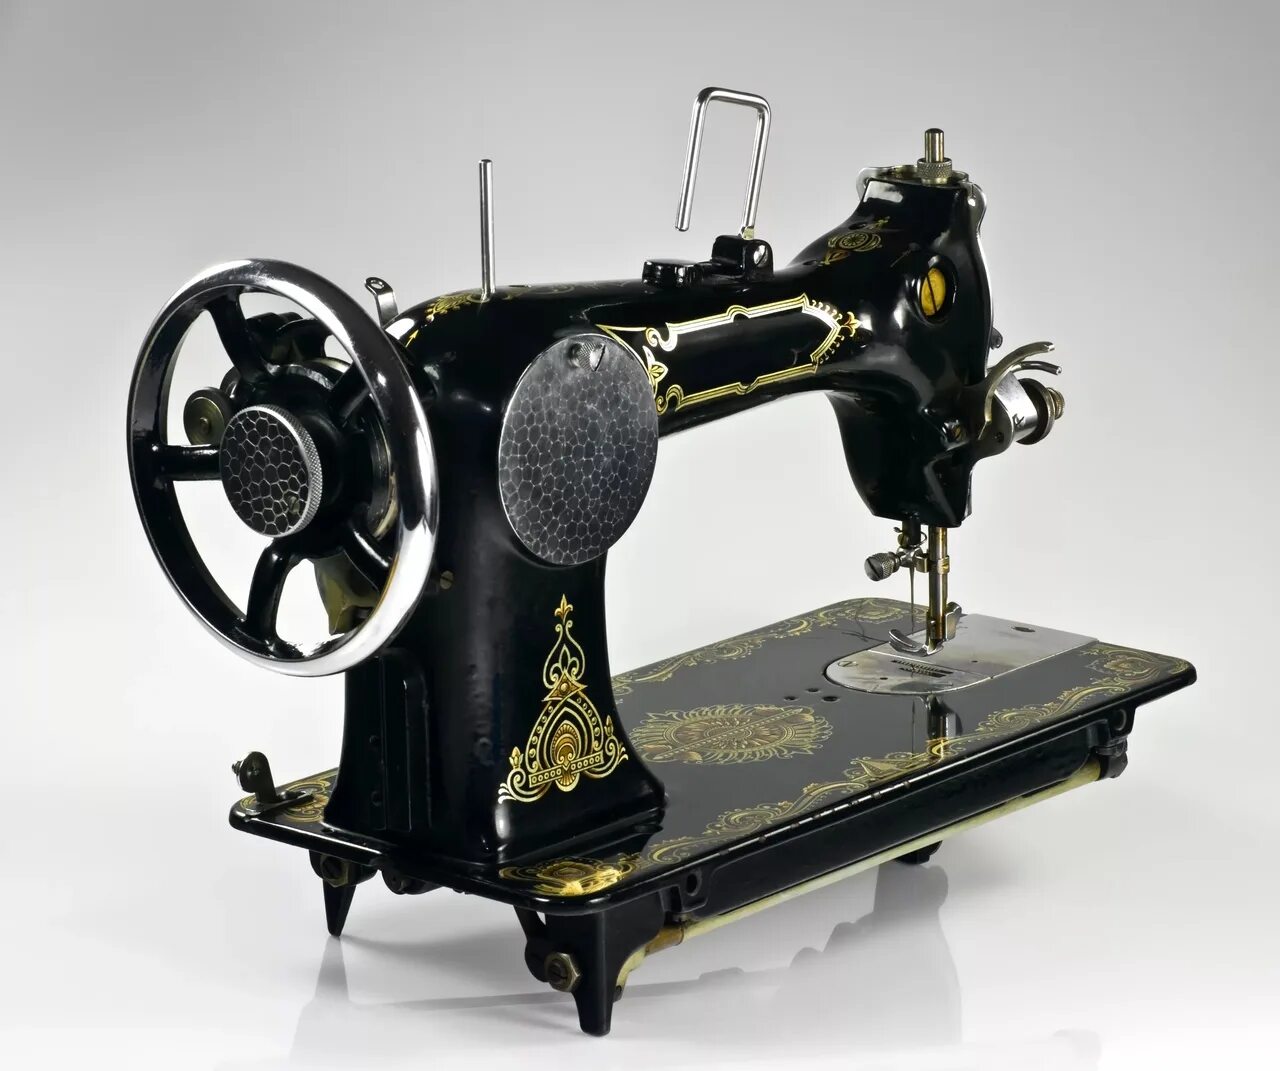 Швейная машинка karingbee. Zinger швейная машинка 2022. Vesta Sewing Machine. Швейная машинка Sewing Machine.